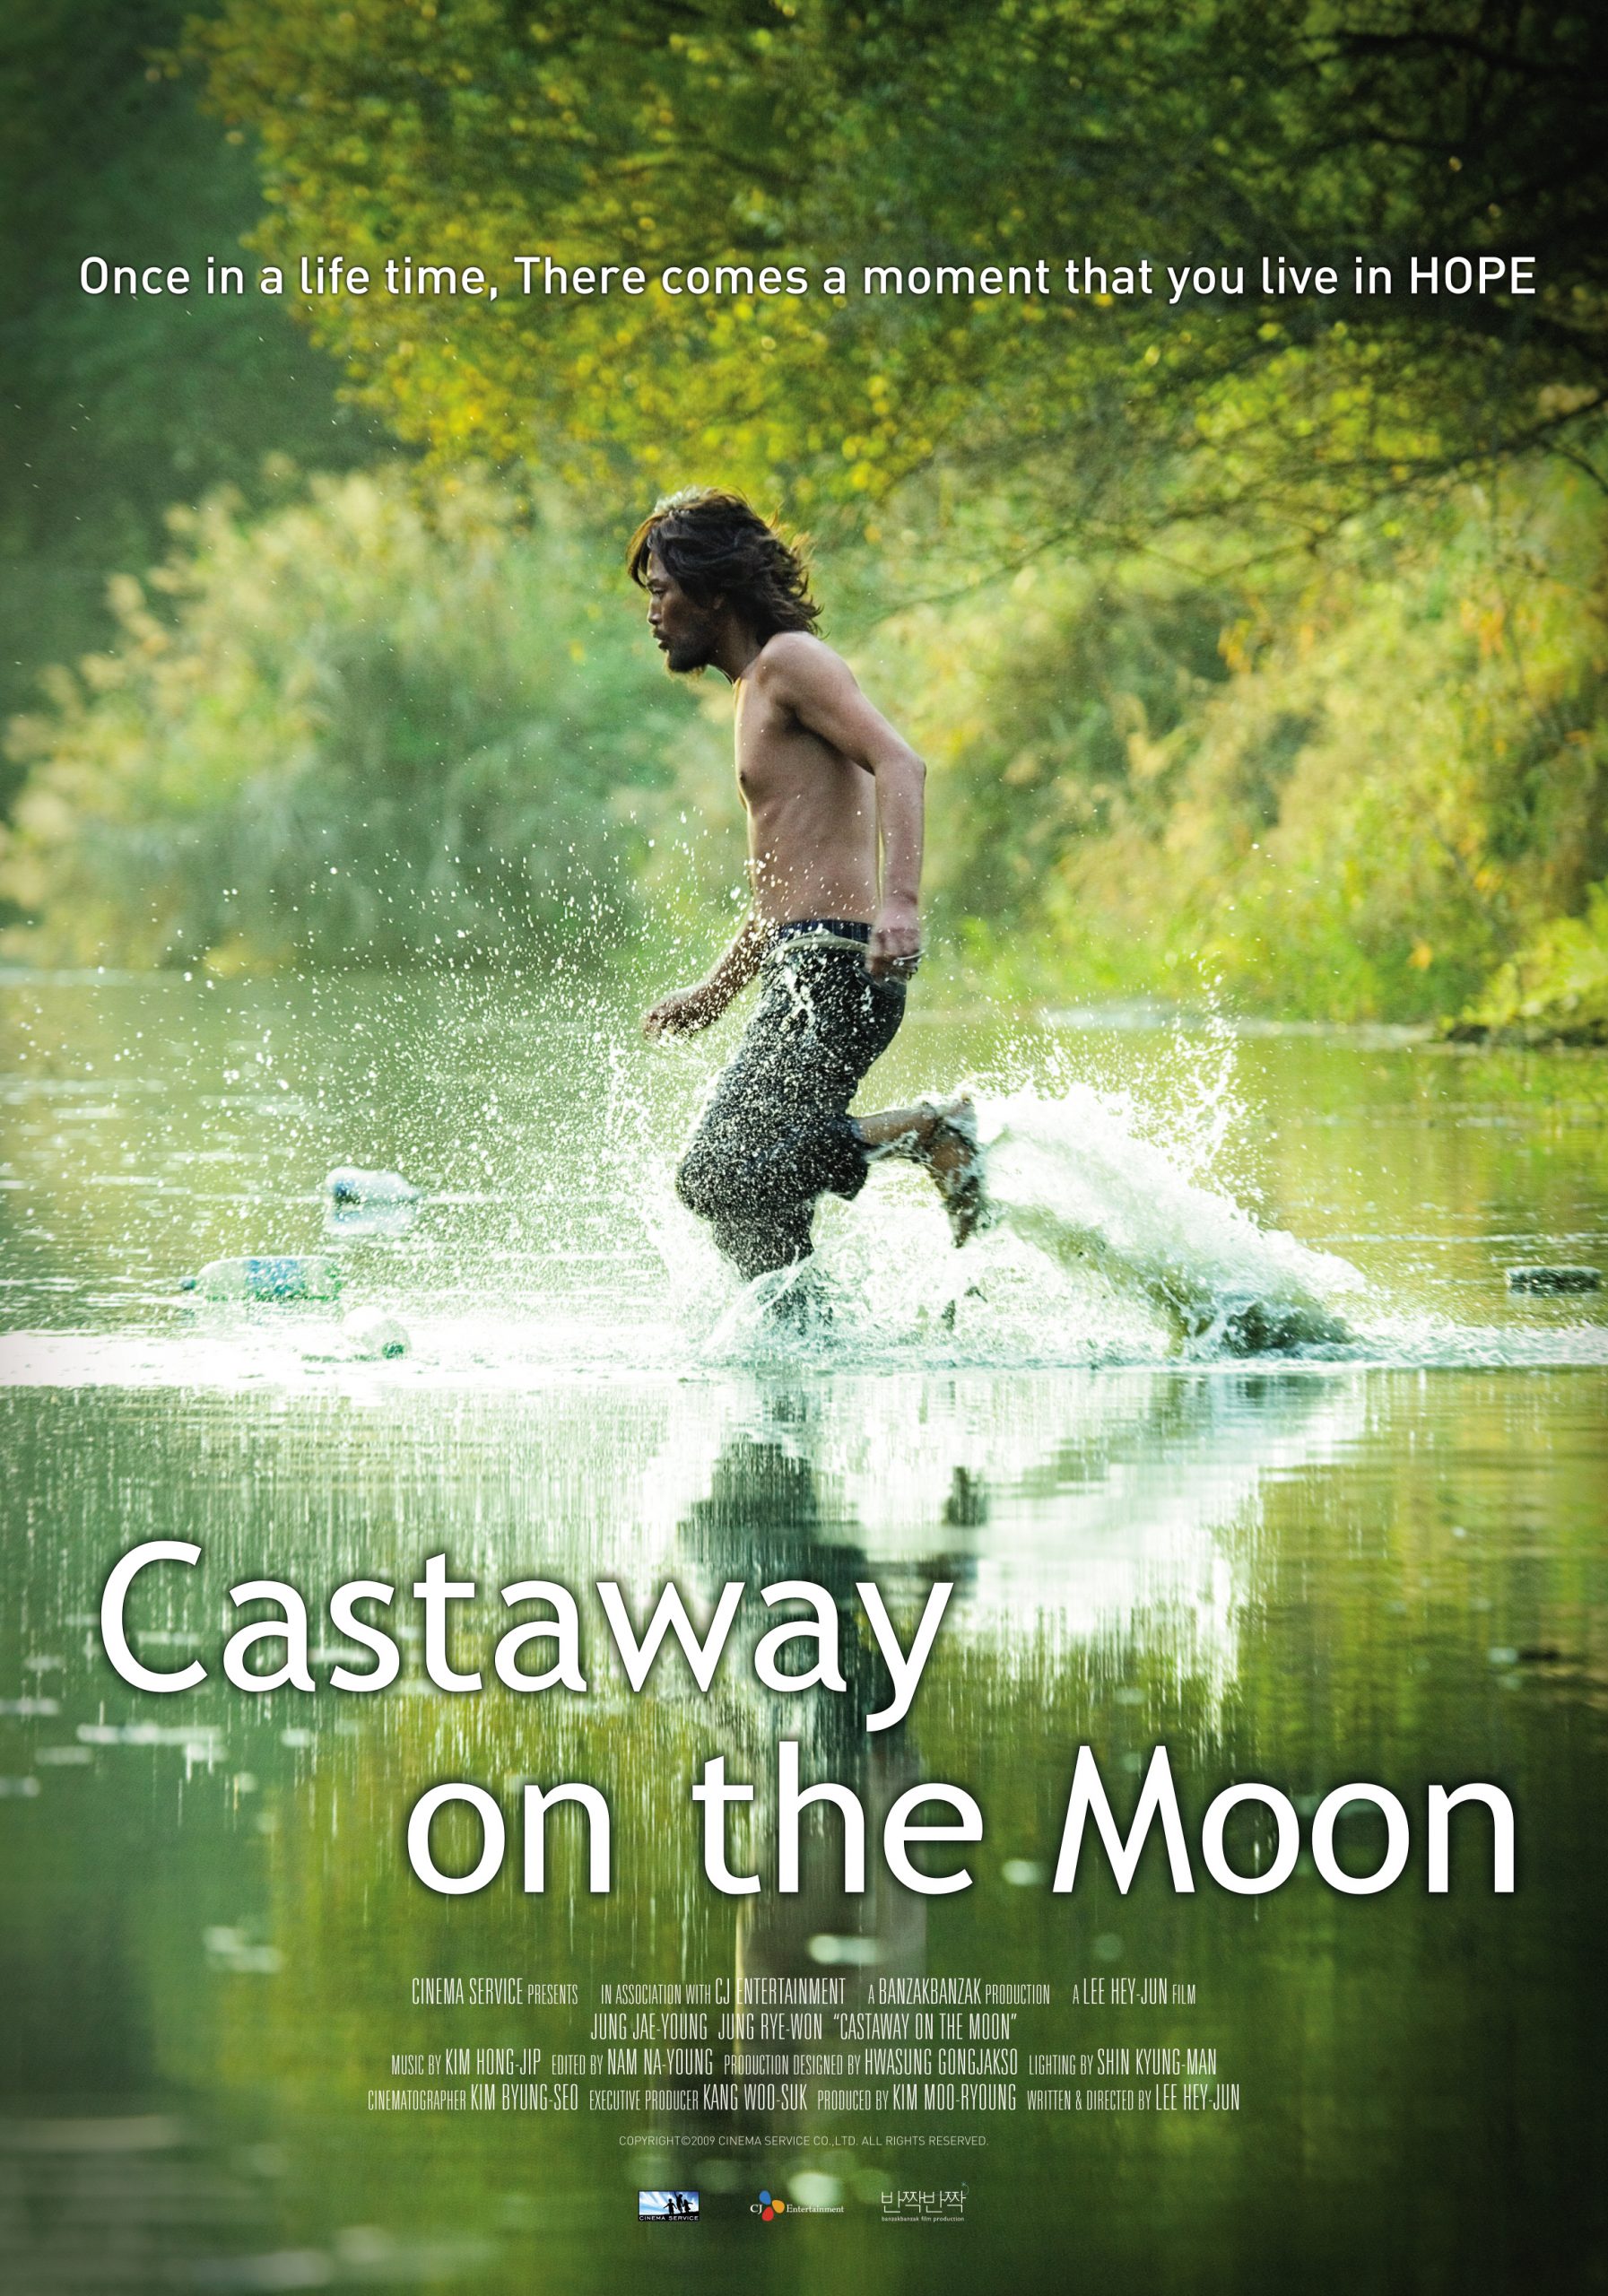 Castaway on the Moon (2009) ส่องดีนักรักซะเลย